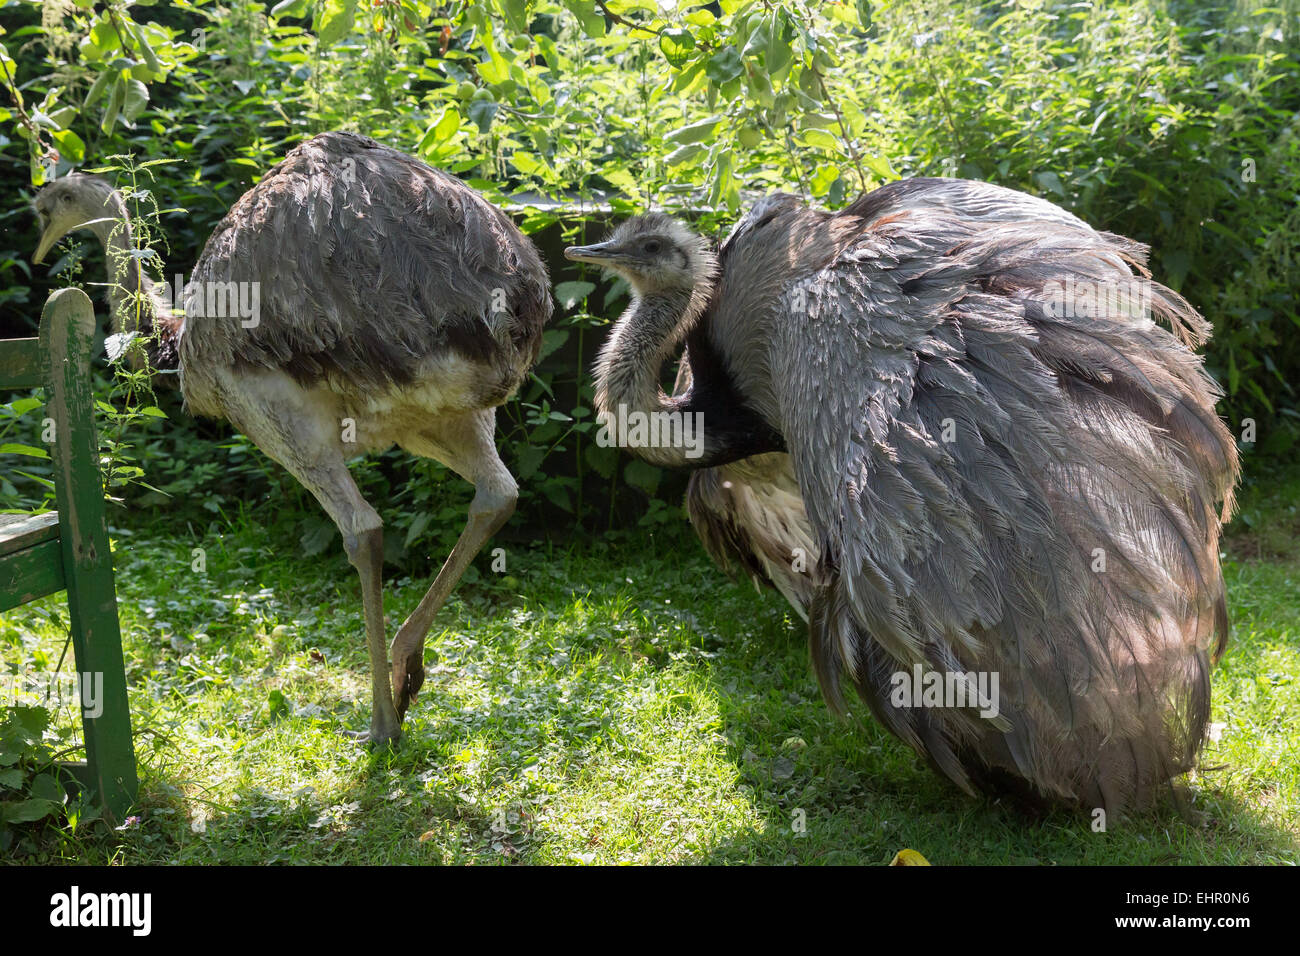 Two rheas on a farm Stock Photo